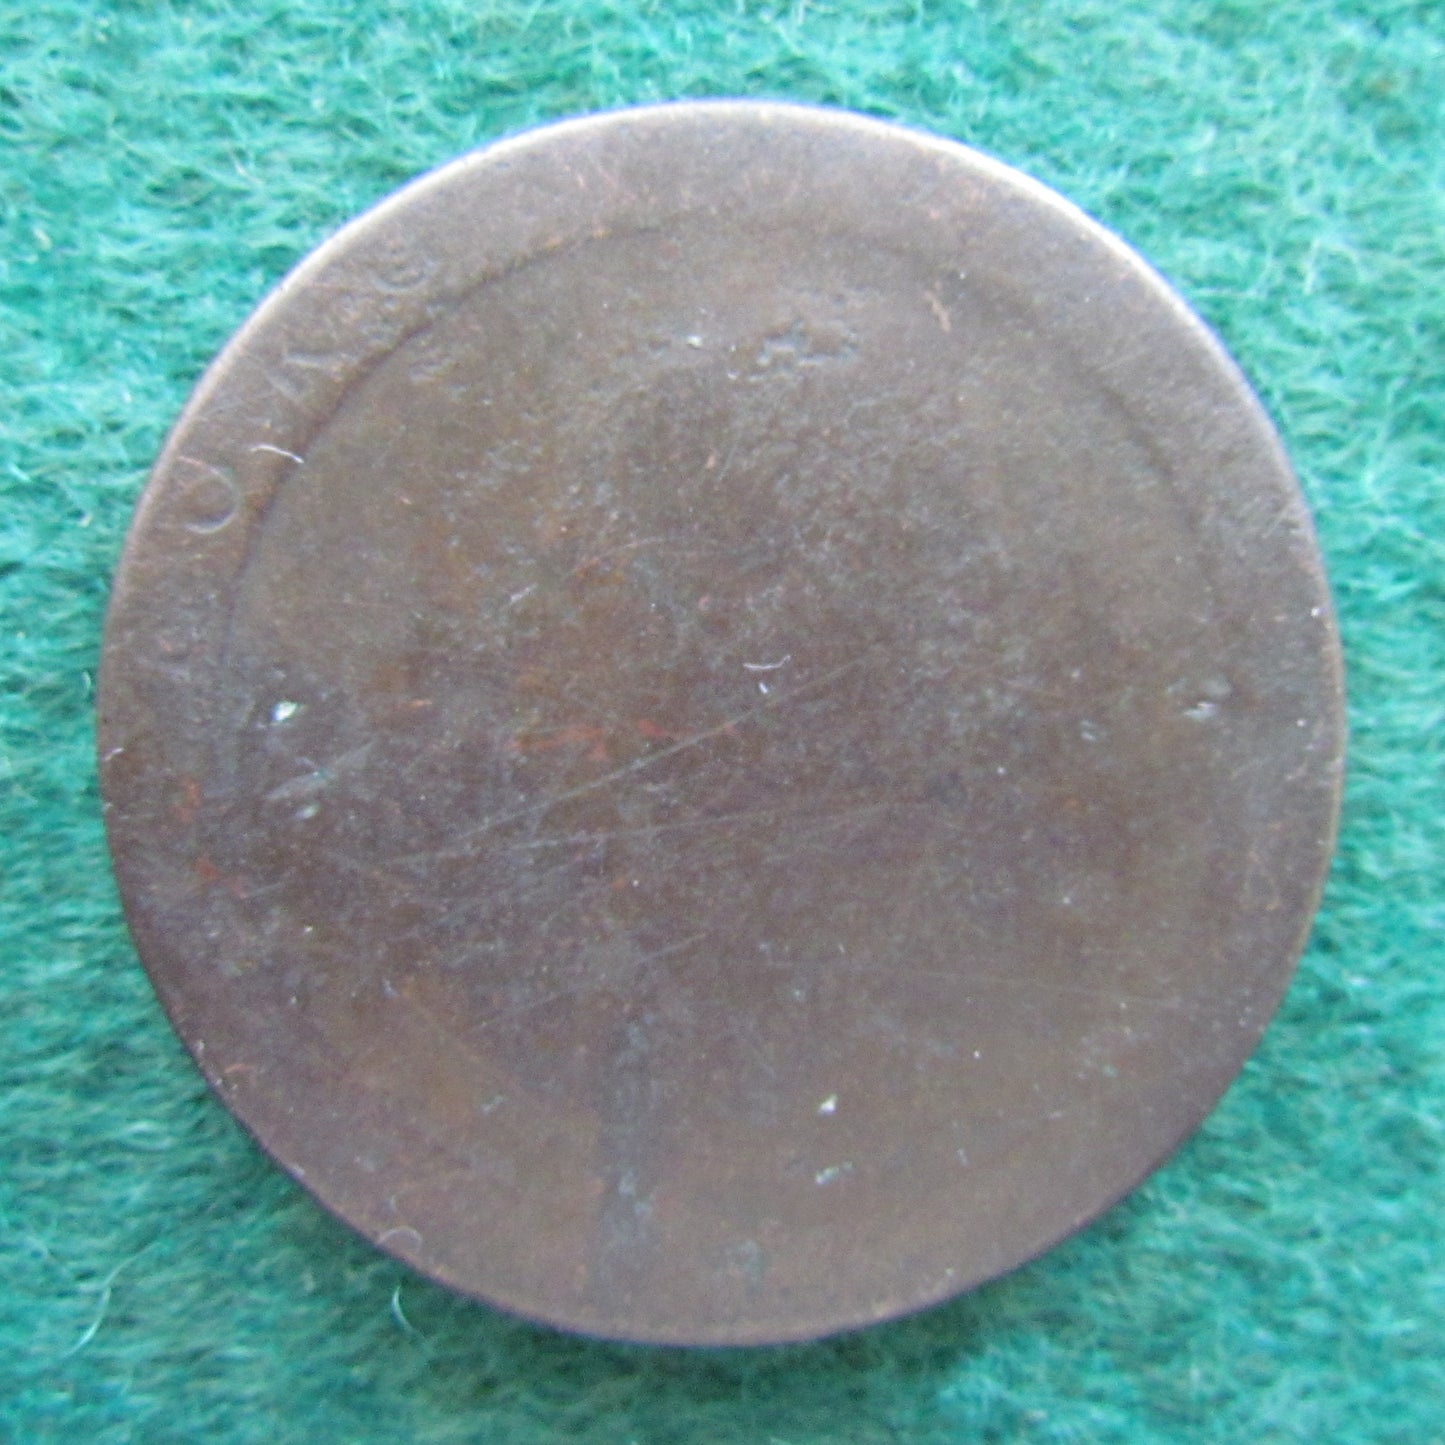 GB British UK English 1797 Penny Cartwheel King George III Coin - Proclamation Coin